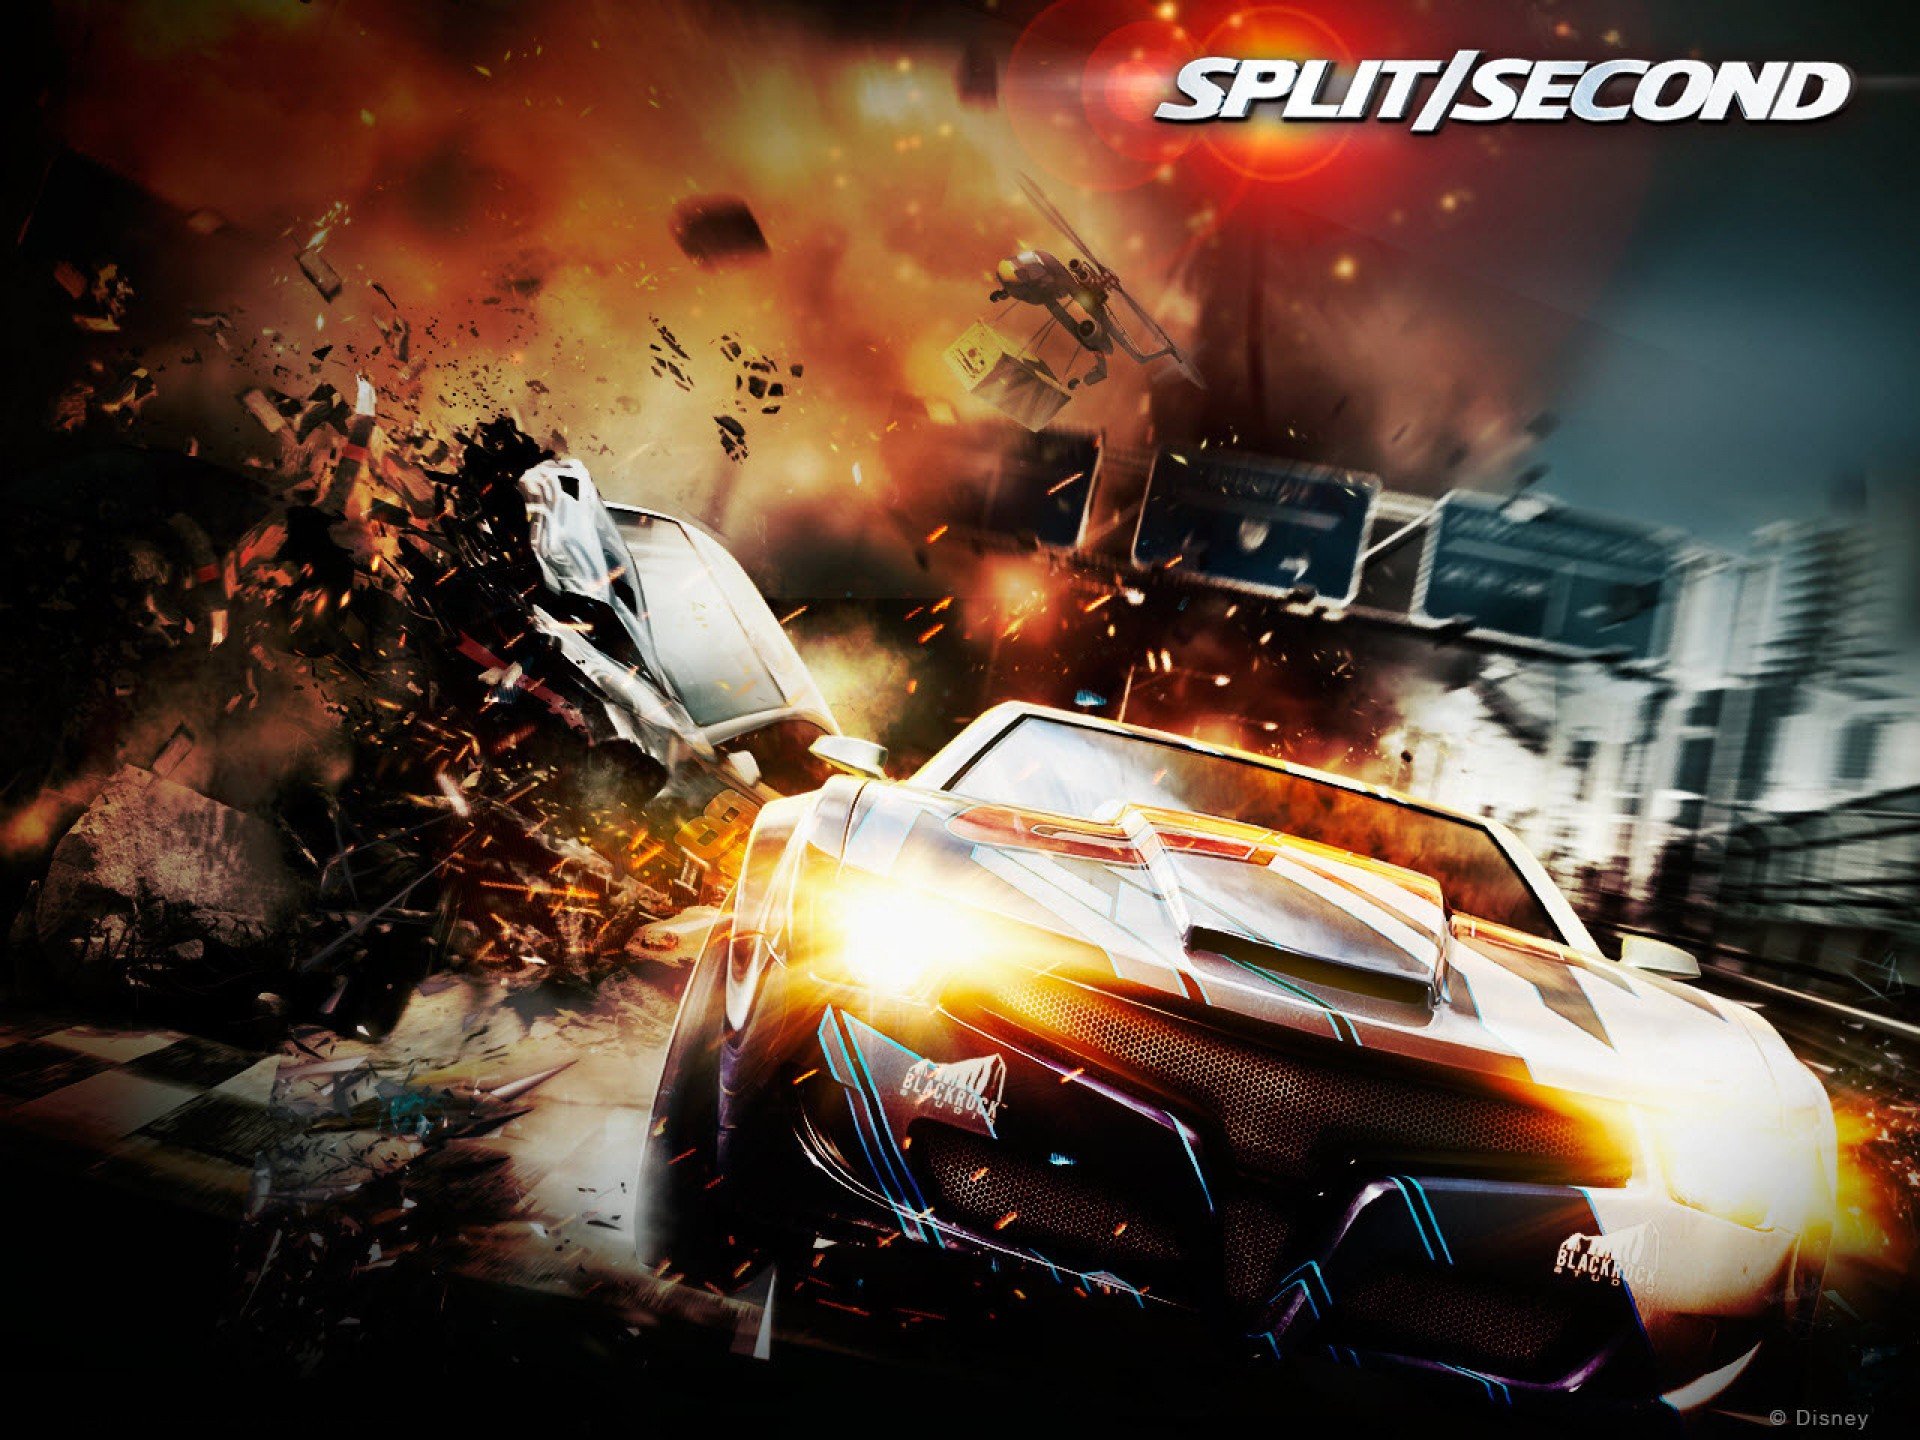 SPLIT SECOND action racing race video game arcade splitsecond velocity